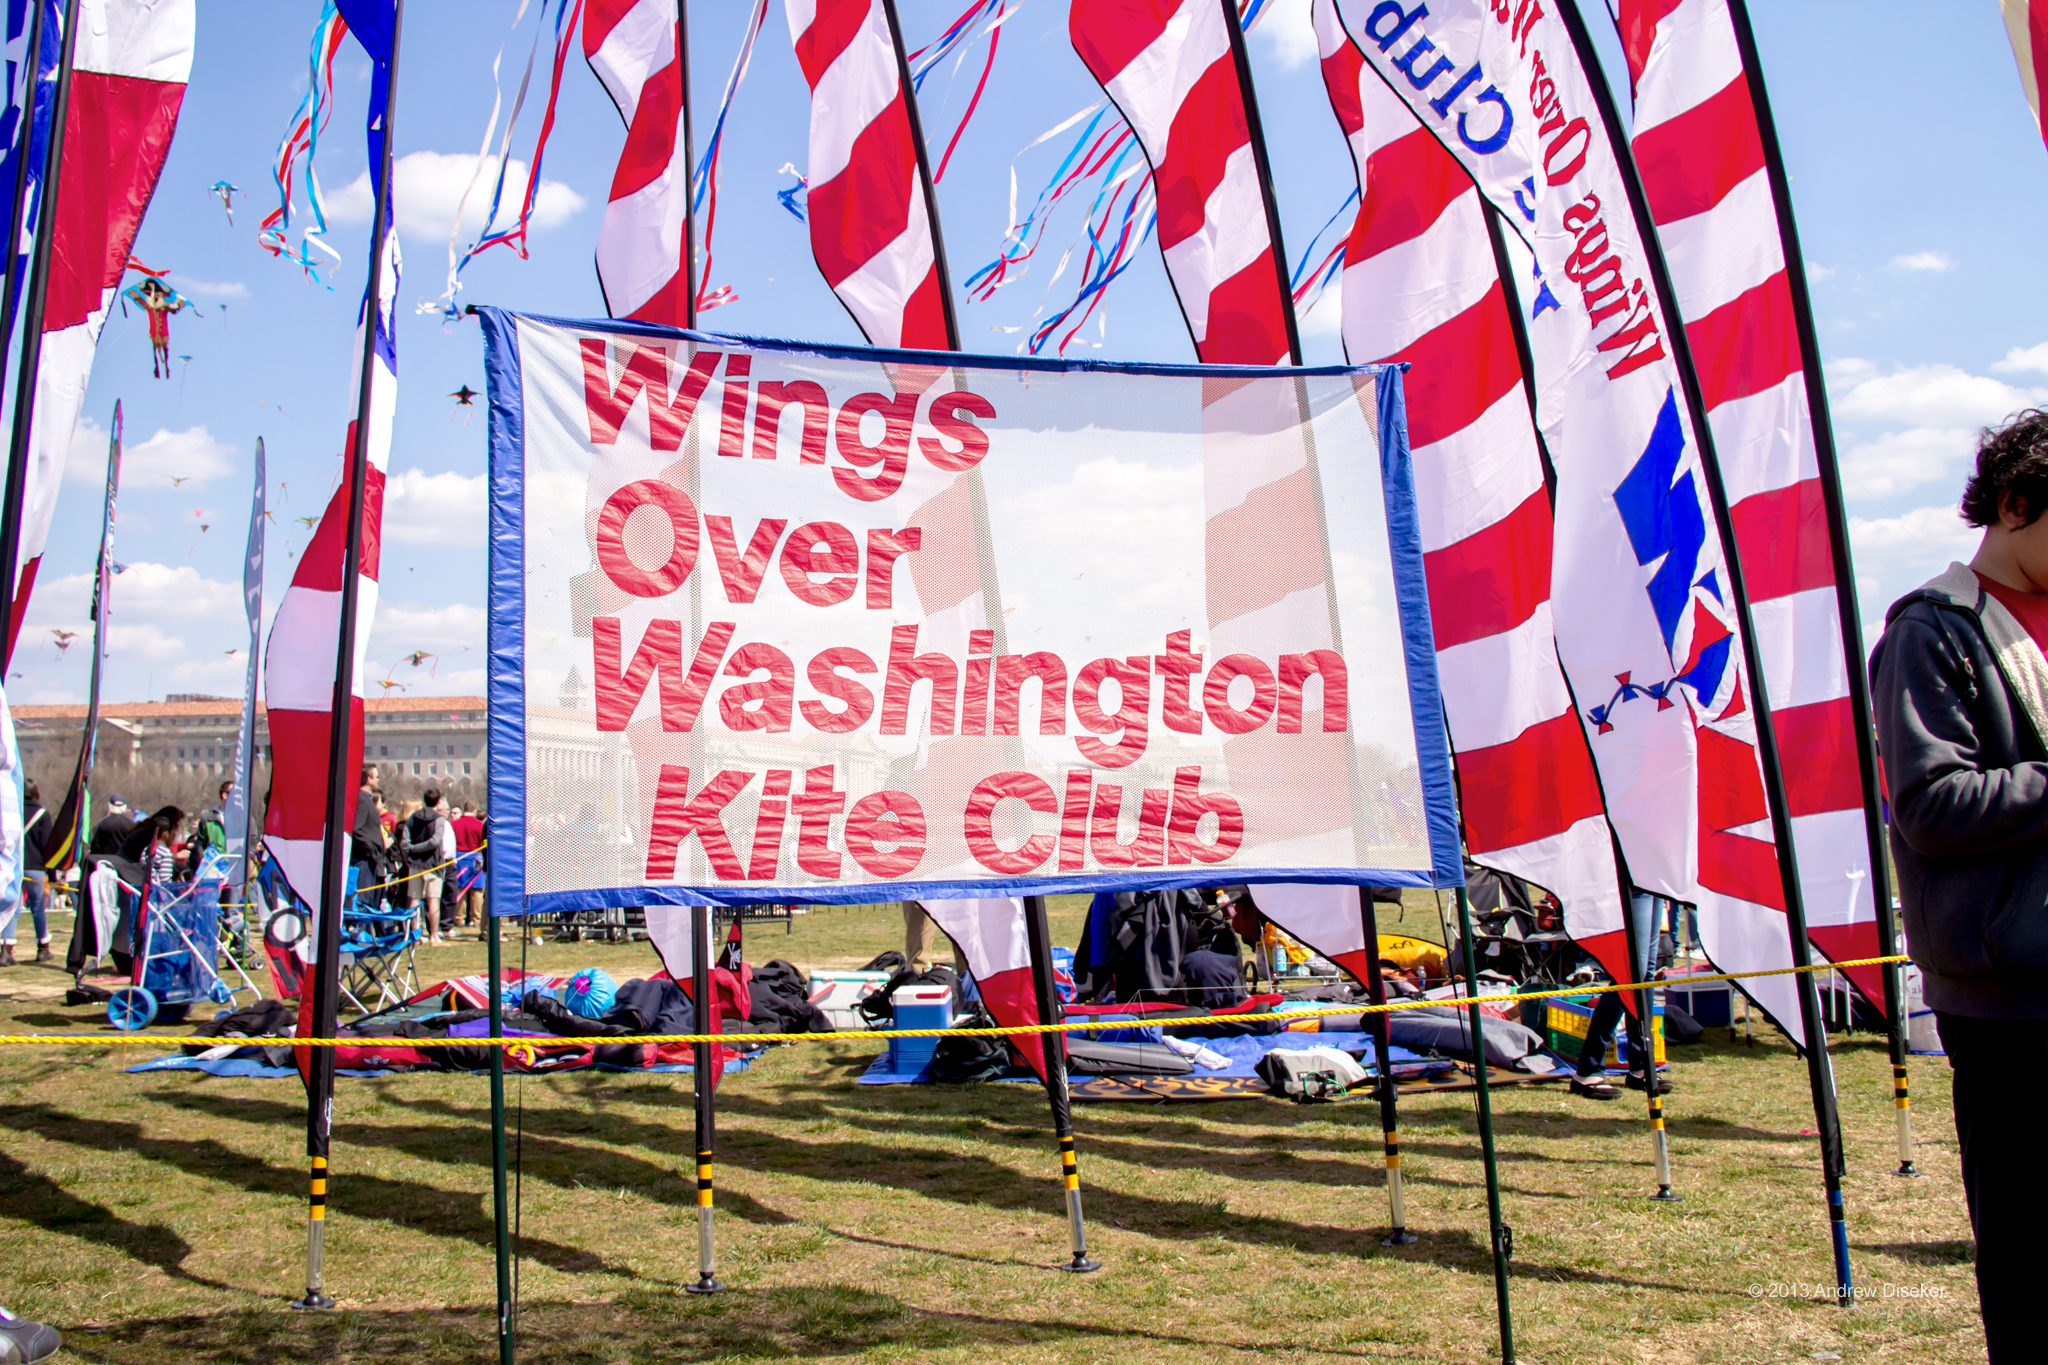 Sign: "Wings Over Washington Kite Club"